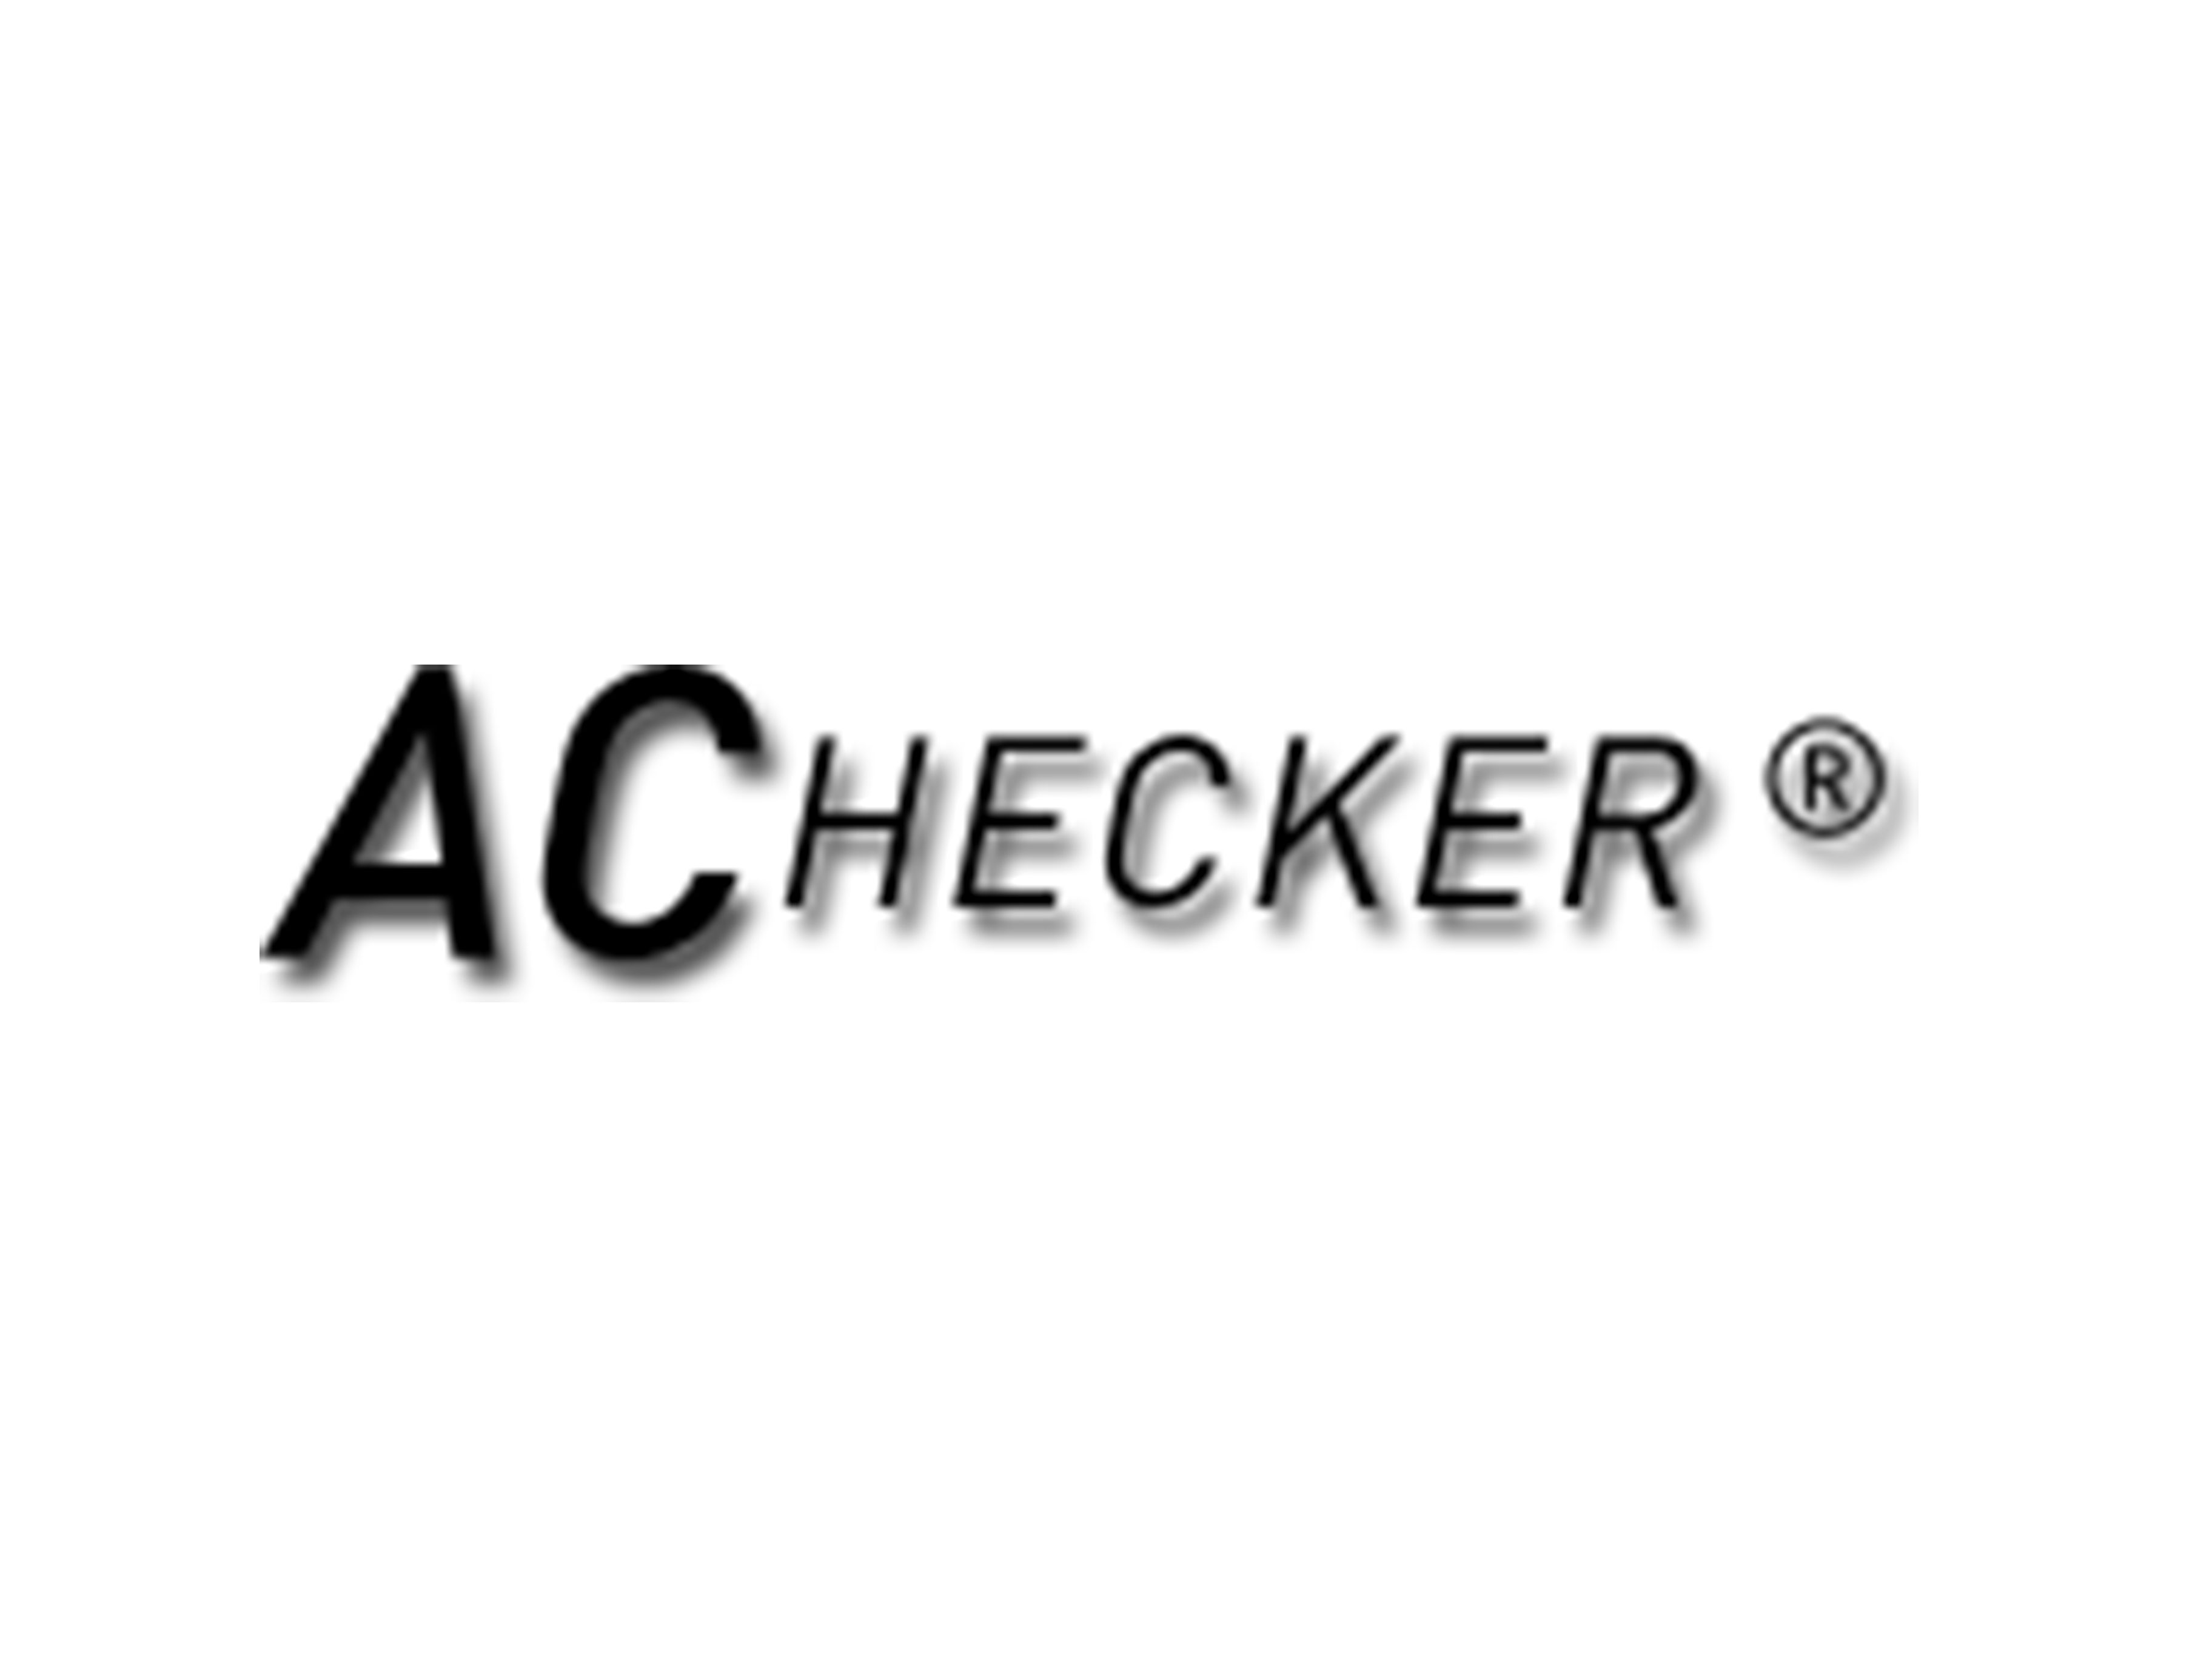 AC checker